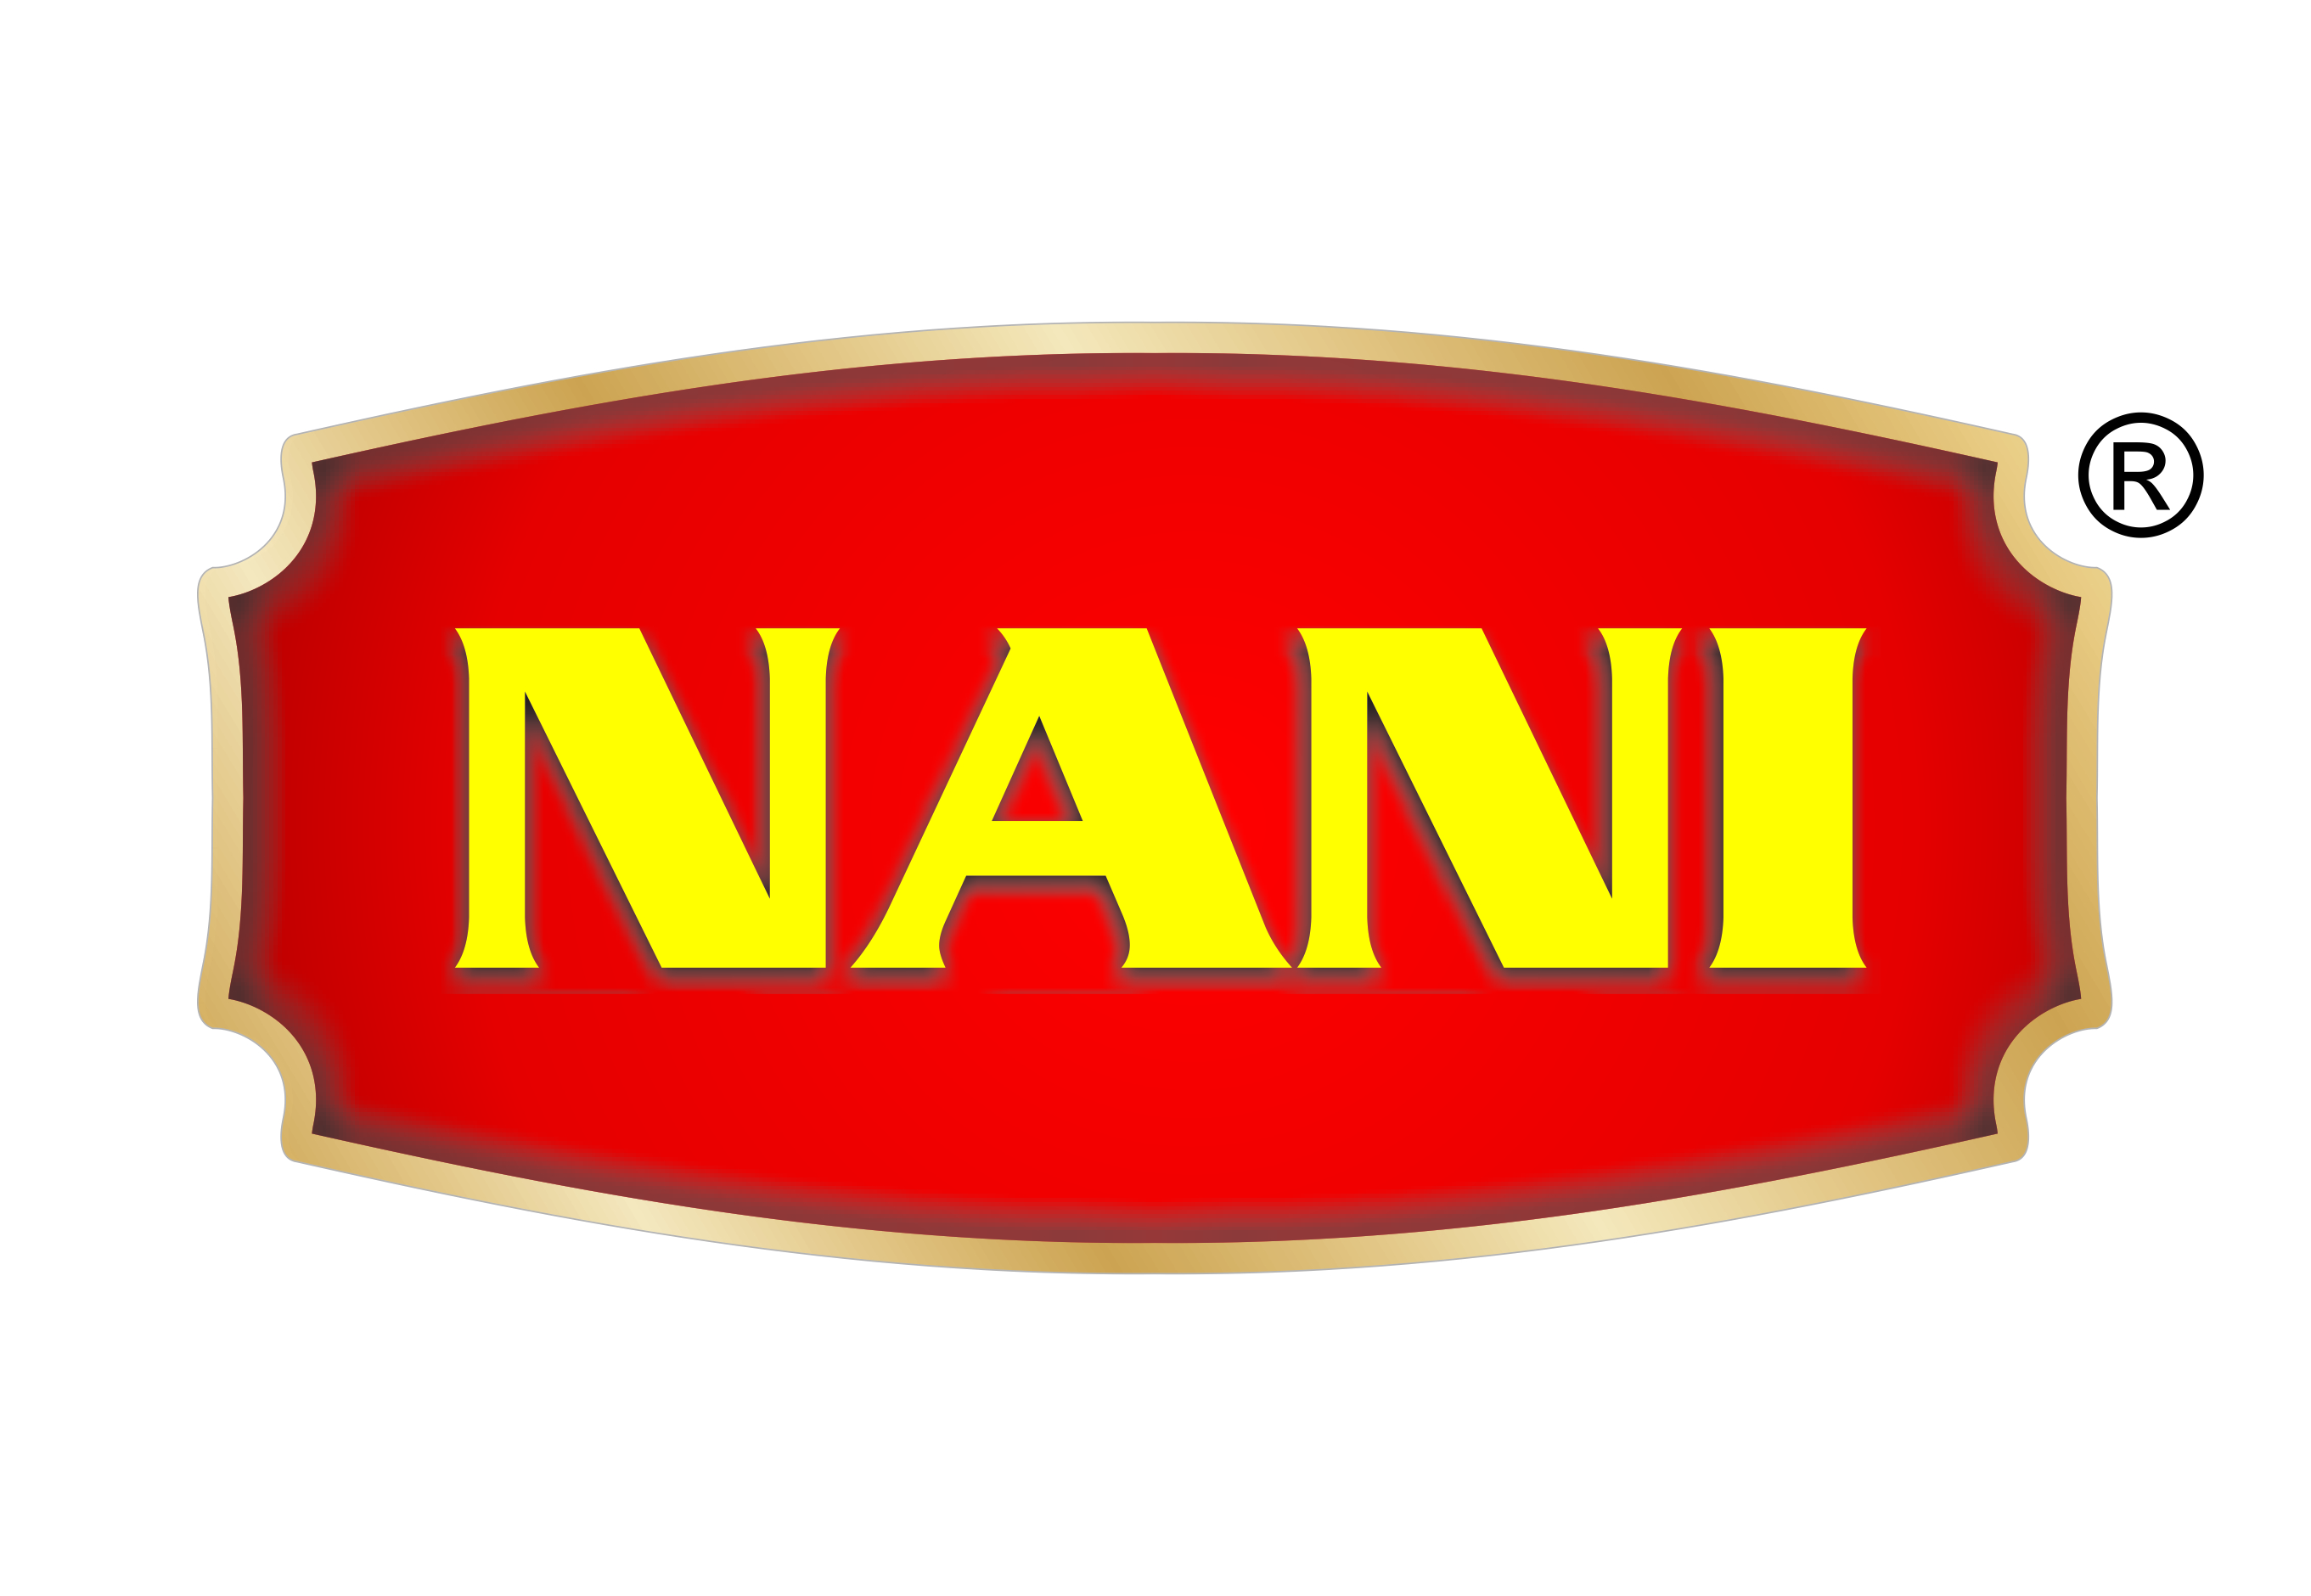 Nani Agro Foods